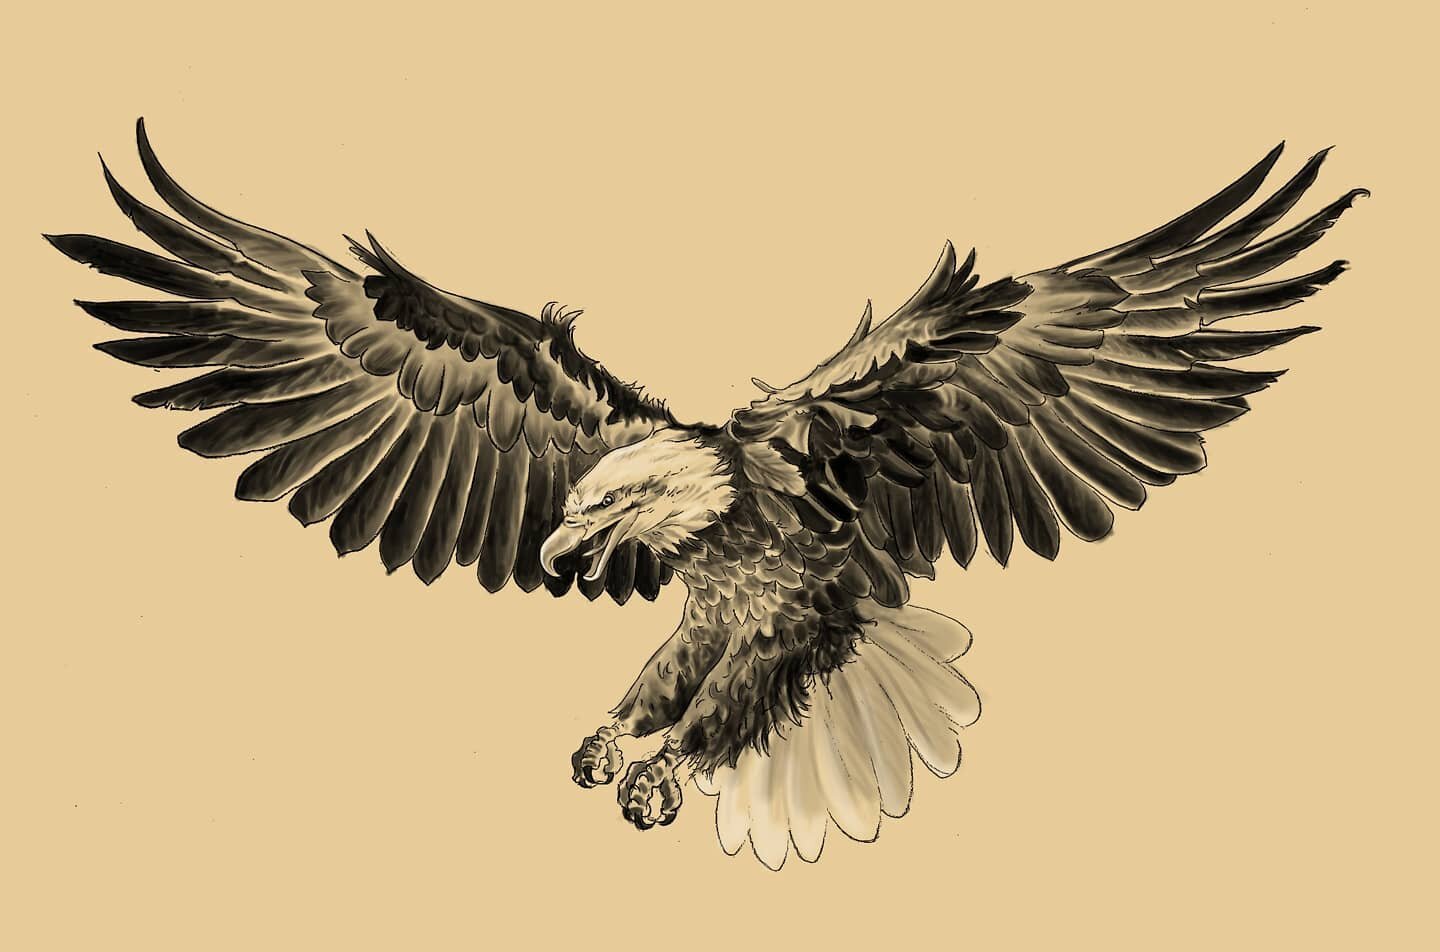 Bald eagle sketch for an upcoming tattoo.

#realistictattoo #baldeagle #blackandgreillustration #birdillustration #eaglewings #eageltattoo